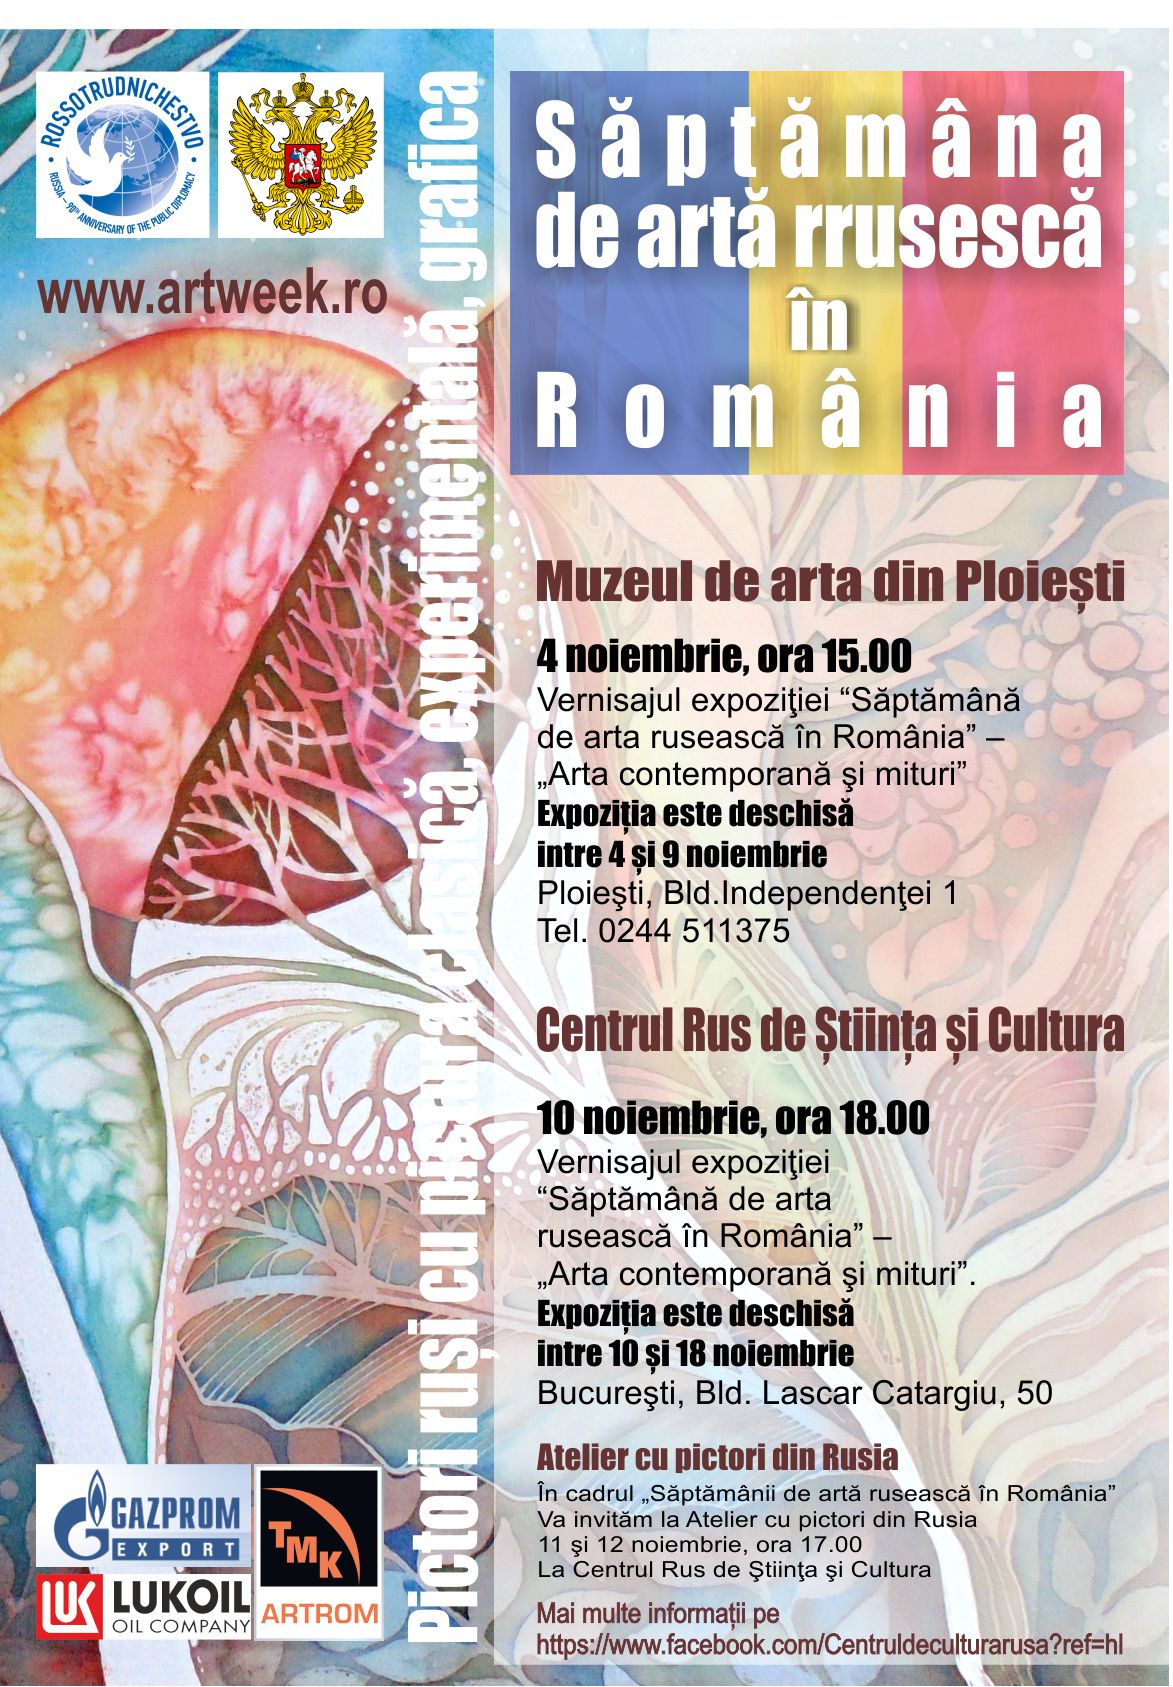 Romania artweekro ro 100